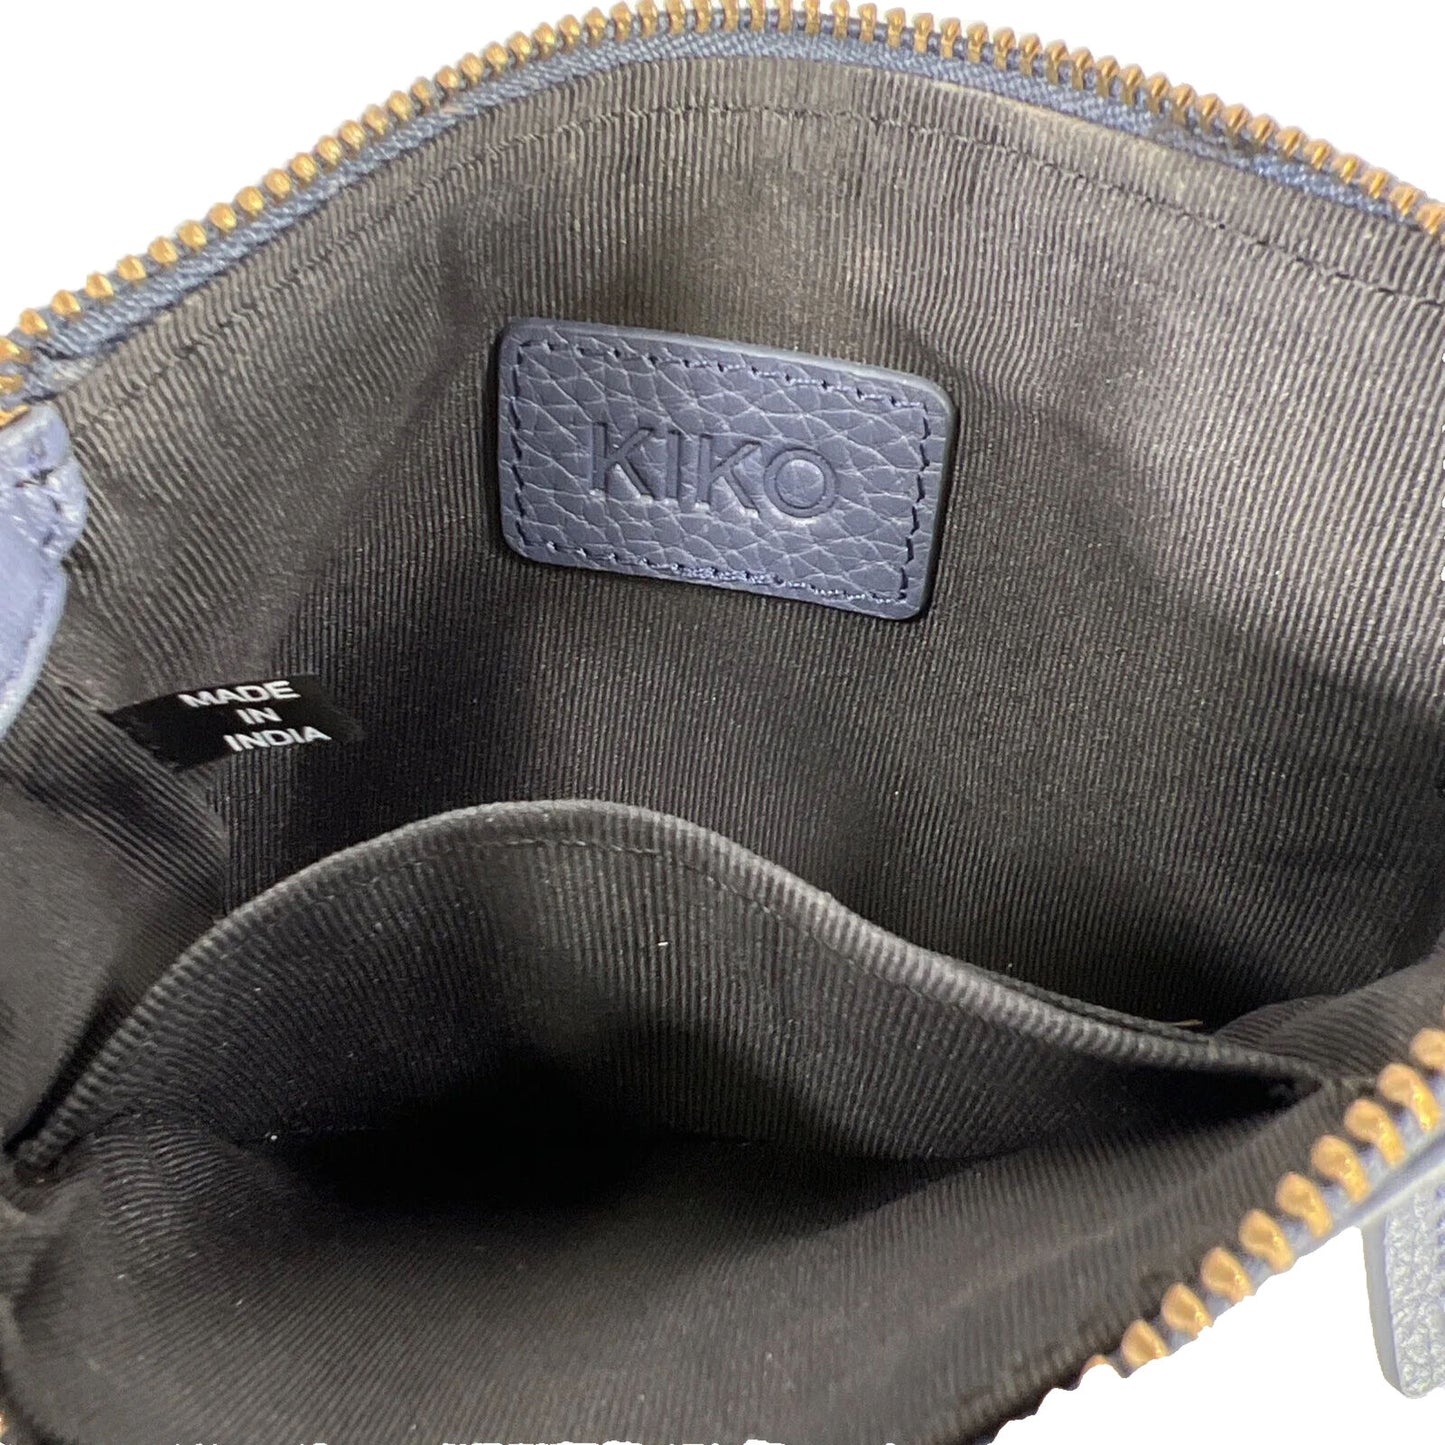 Kiko Women's Blue Leather Zip Close Wristlet Wallet One Size